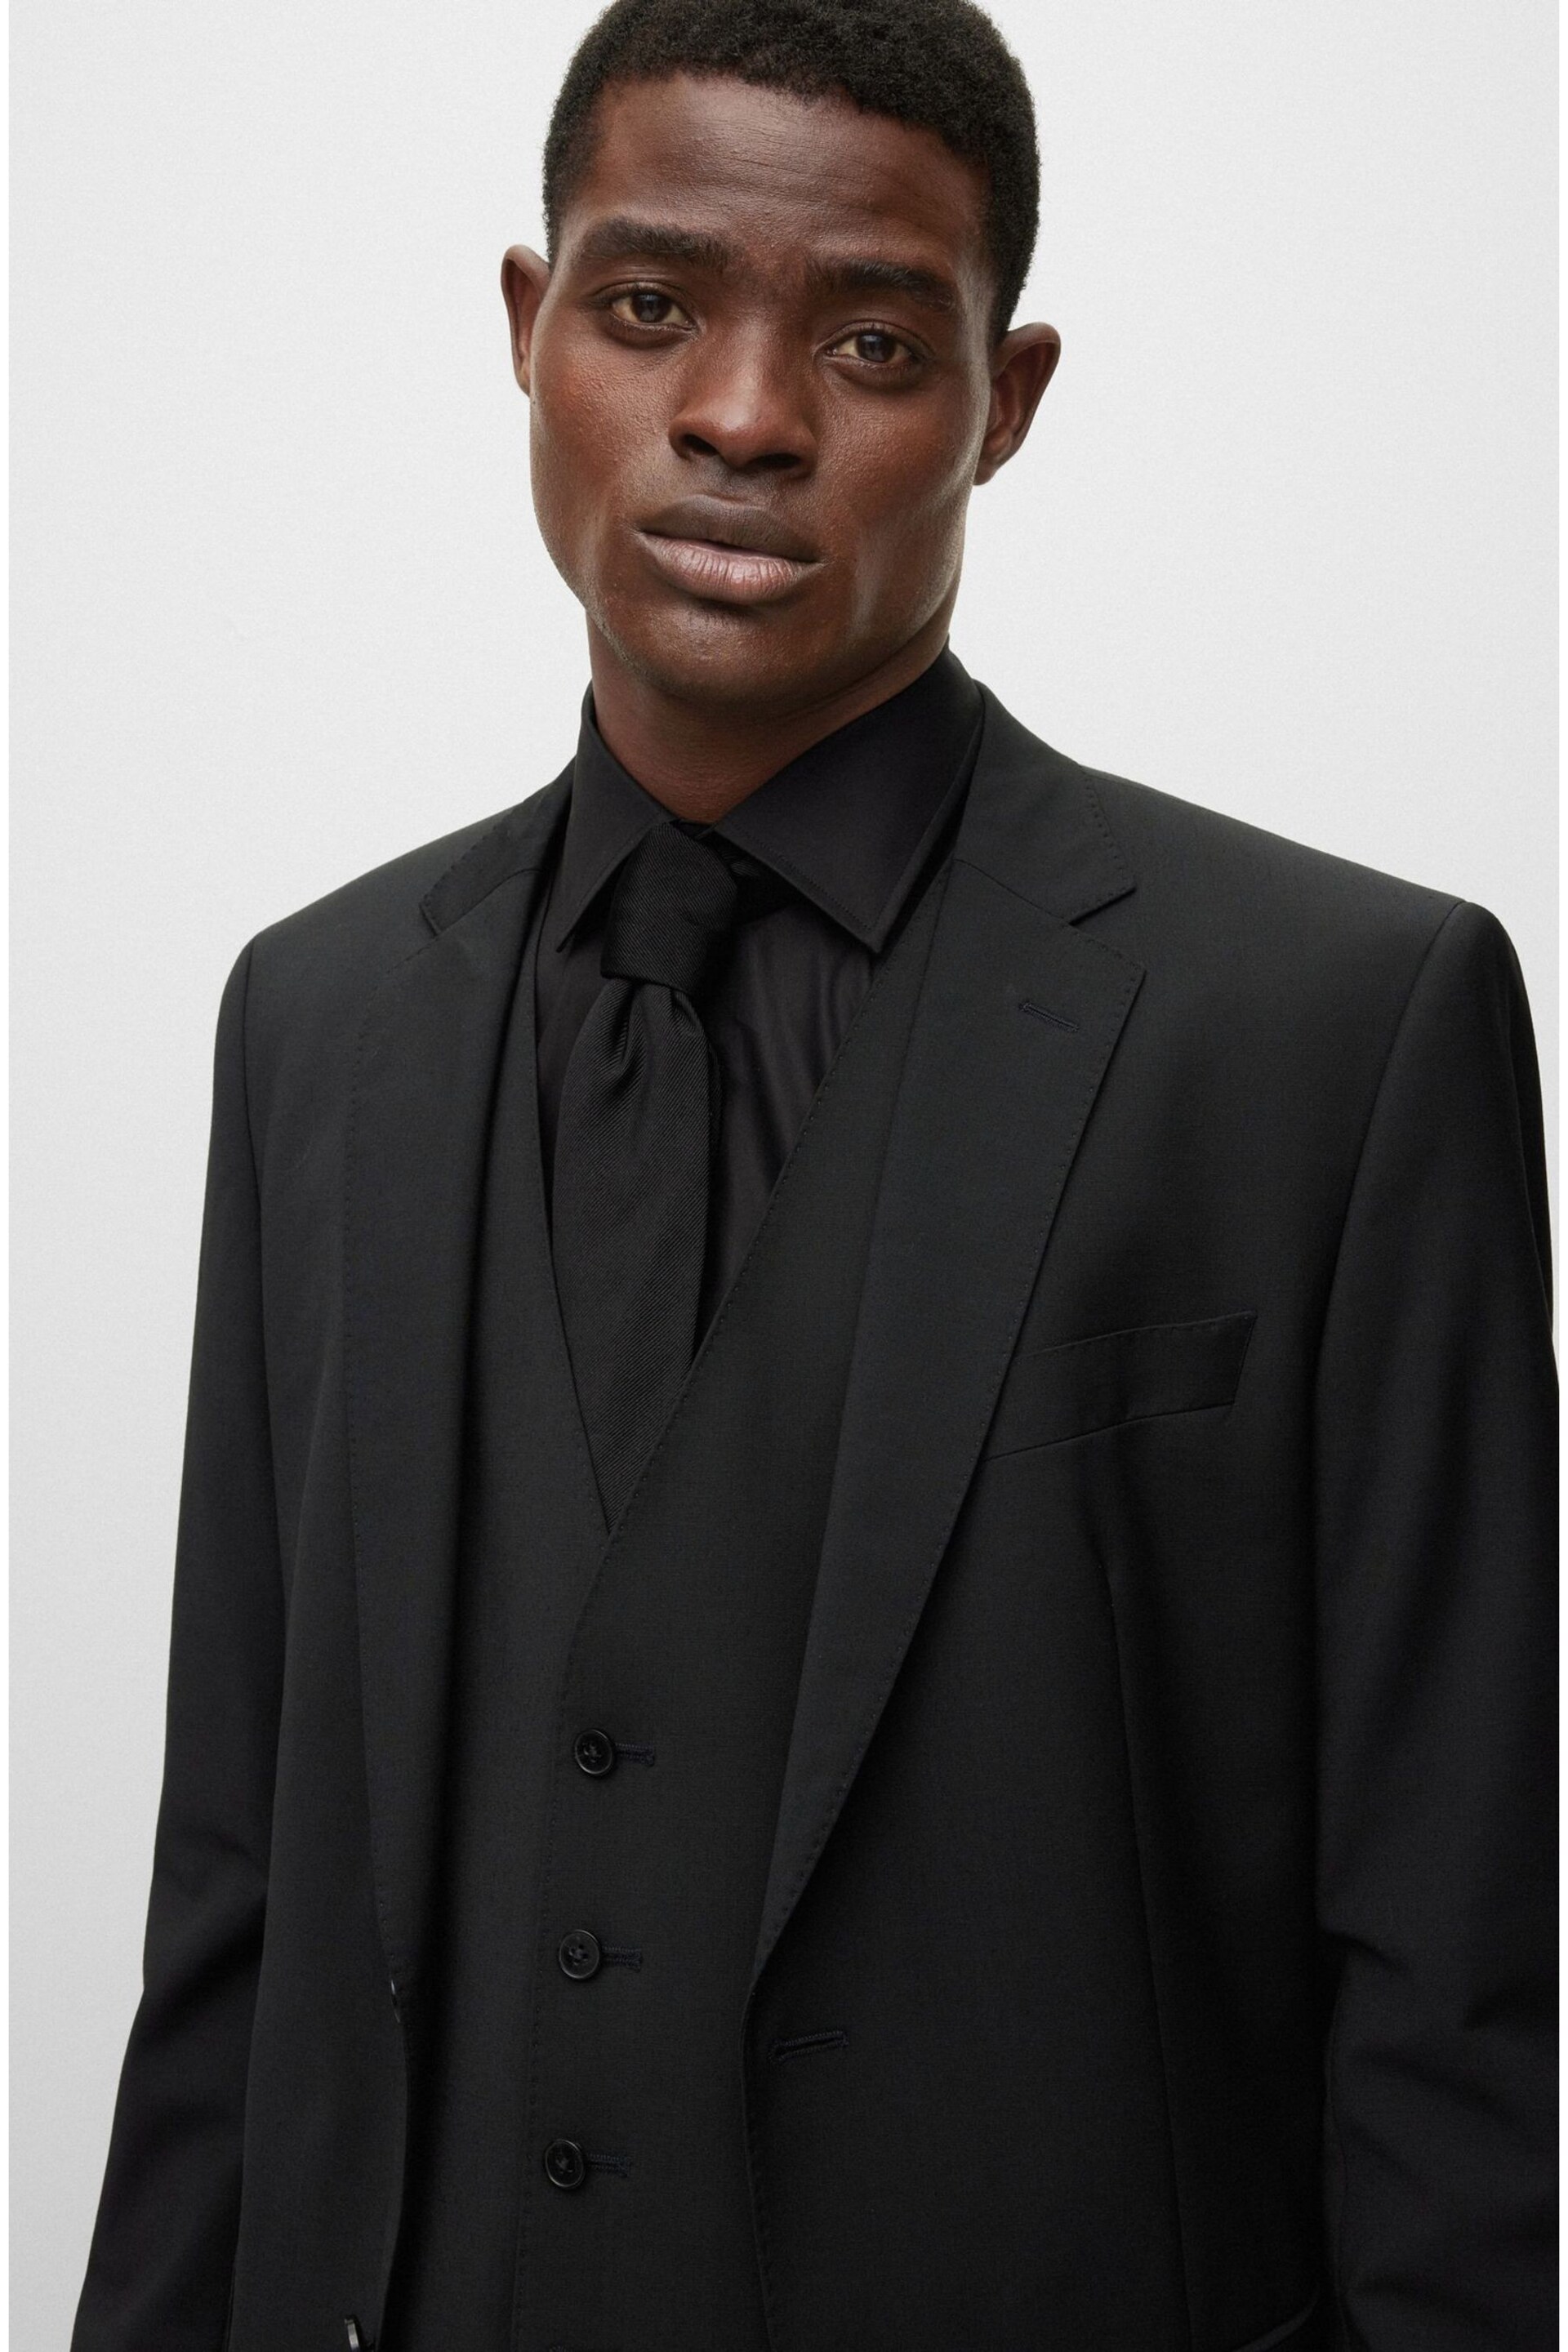 BOSS Black Slim Fit Suit: Jacket - Image 3 of 5